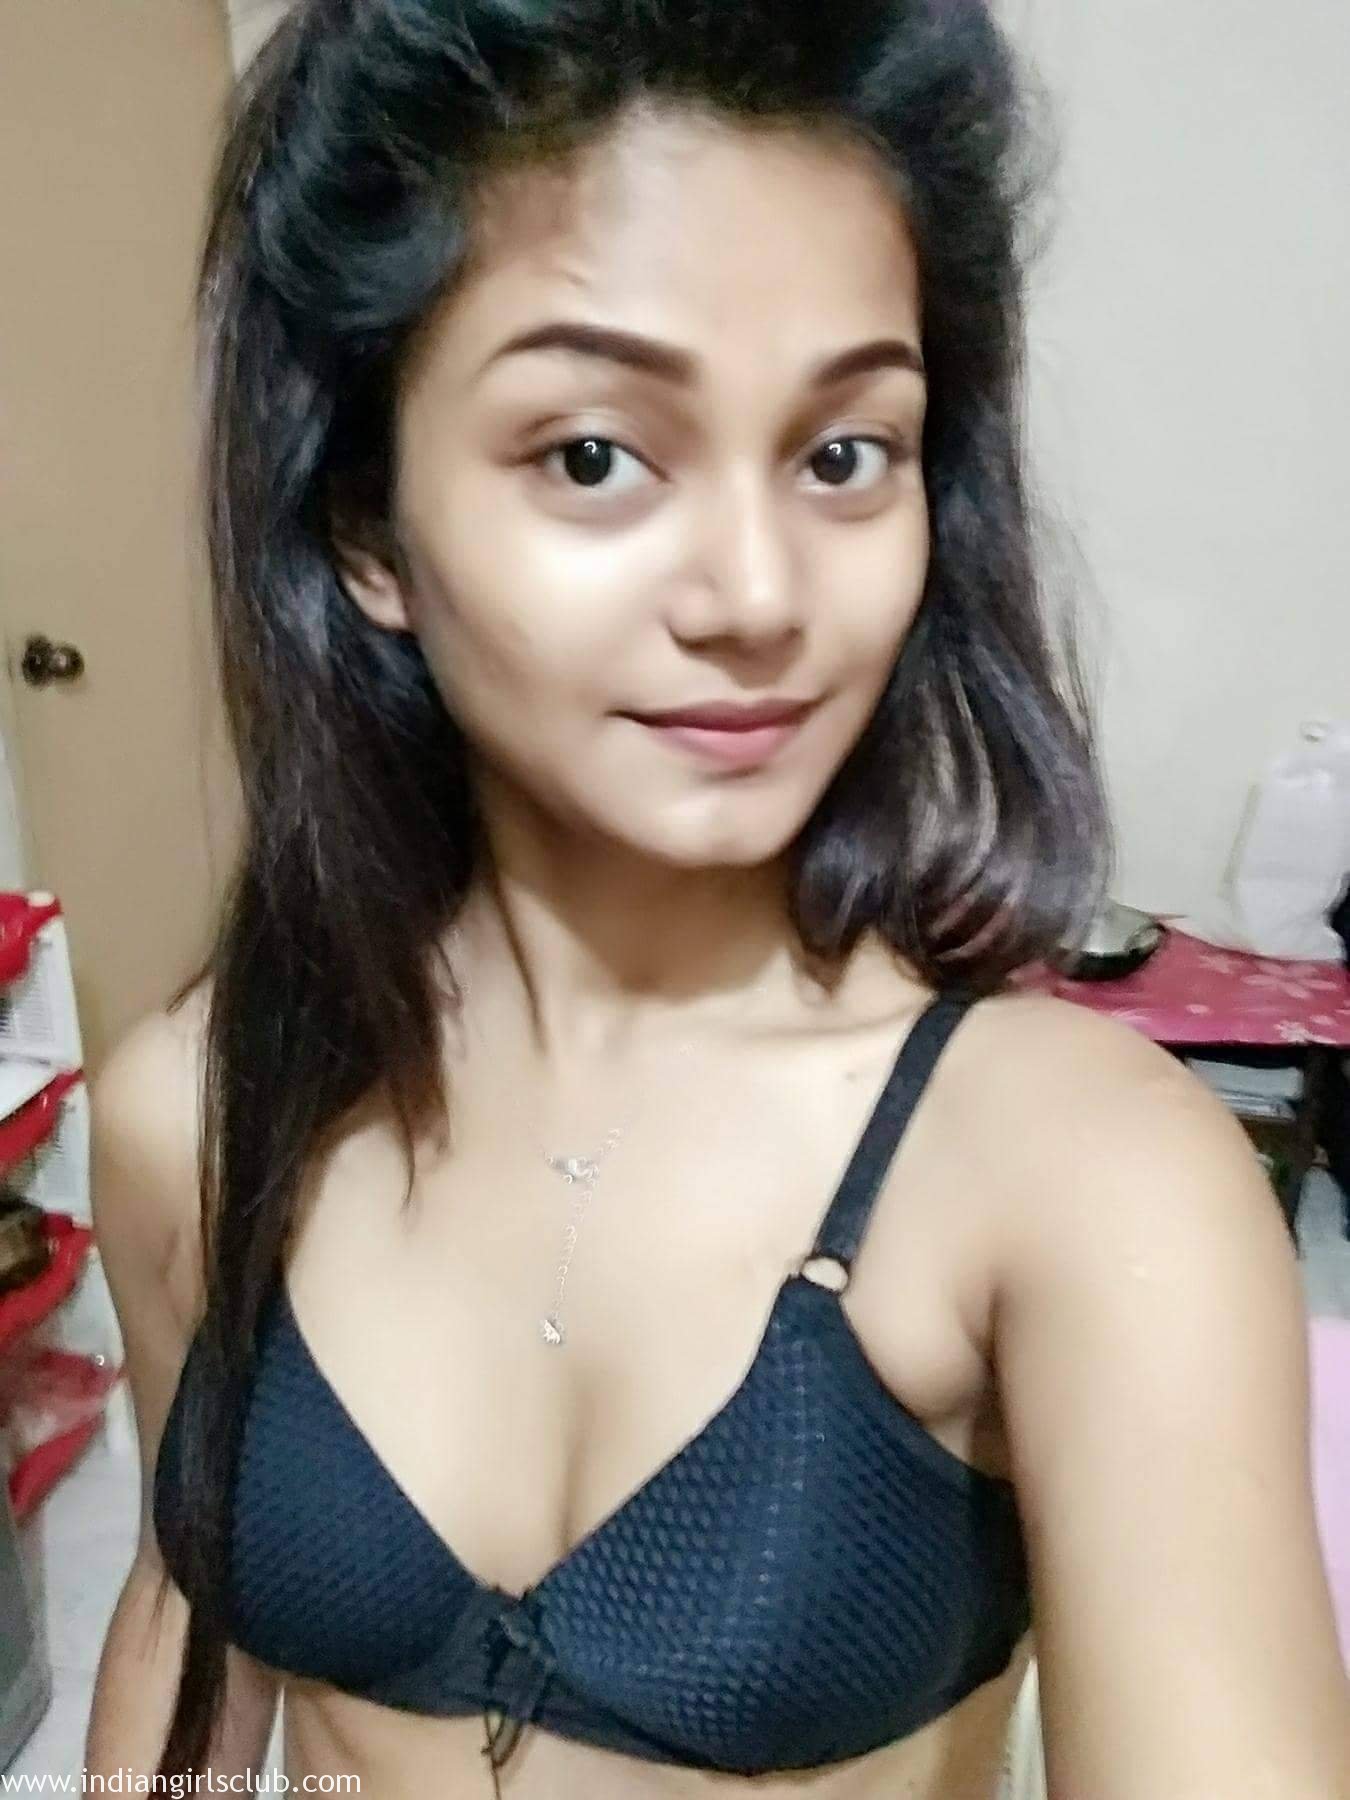 juicy_indian_teen_homemade_porn_16 - Indian Girls Club